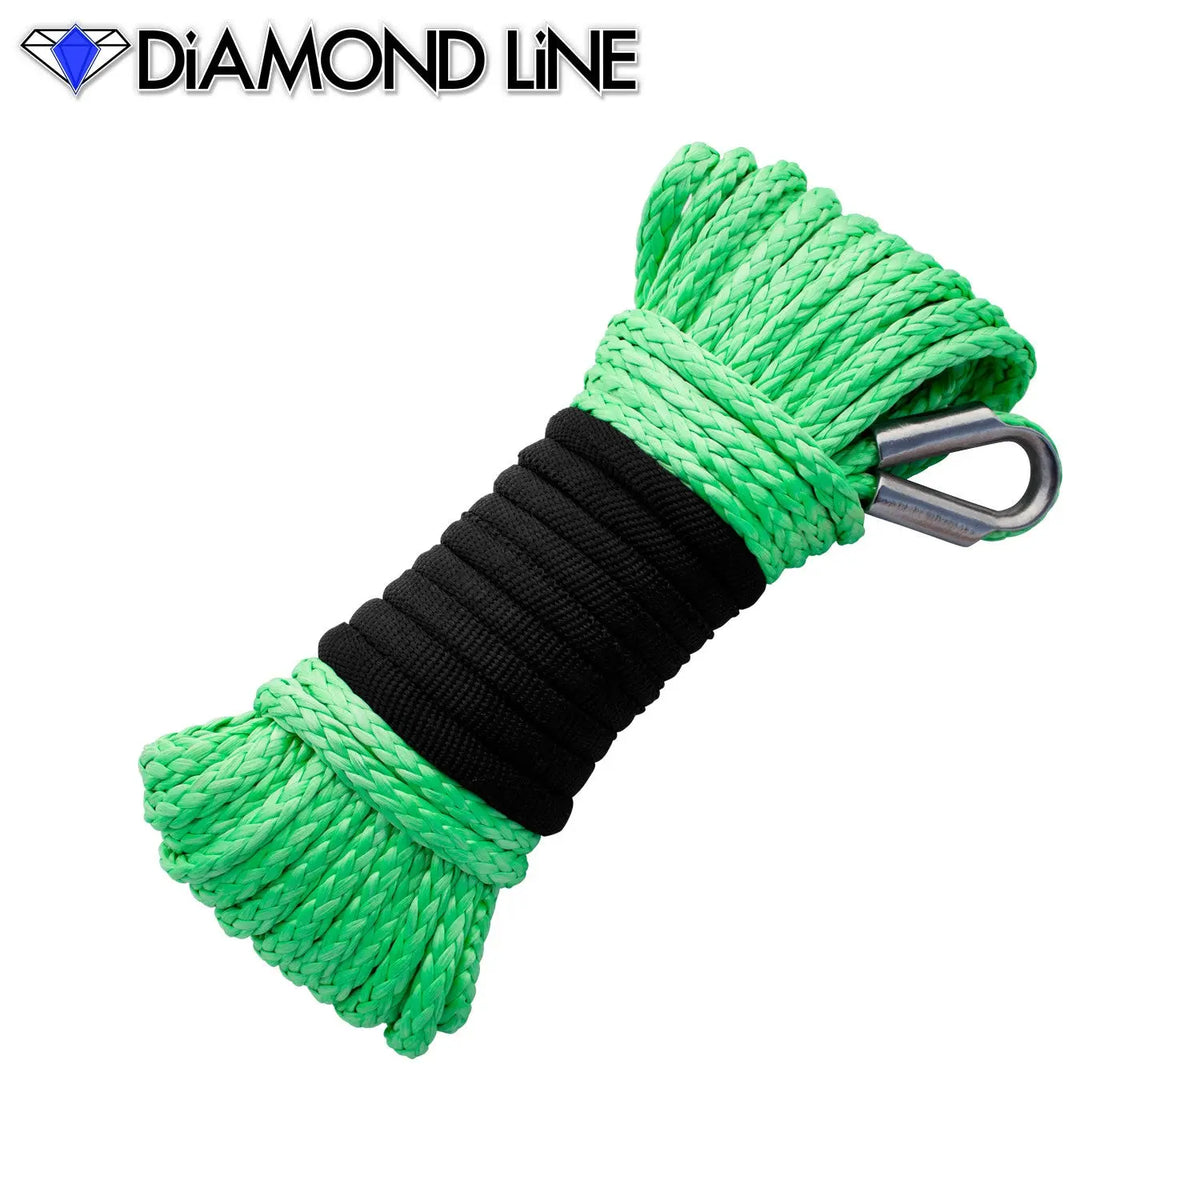 3/16" x 50' Diamond Line Winch Rope Mainline - Bright Green.